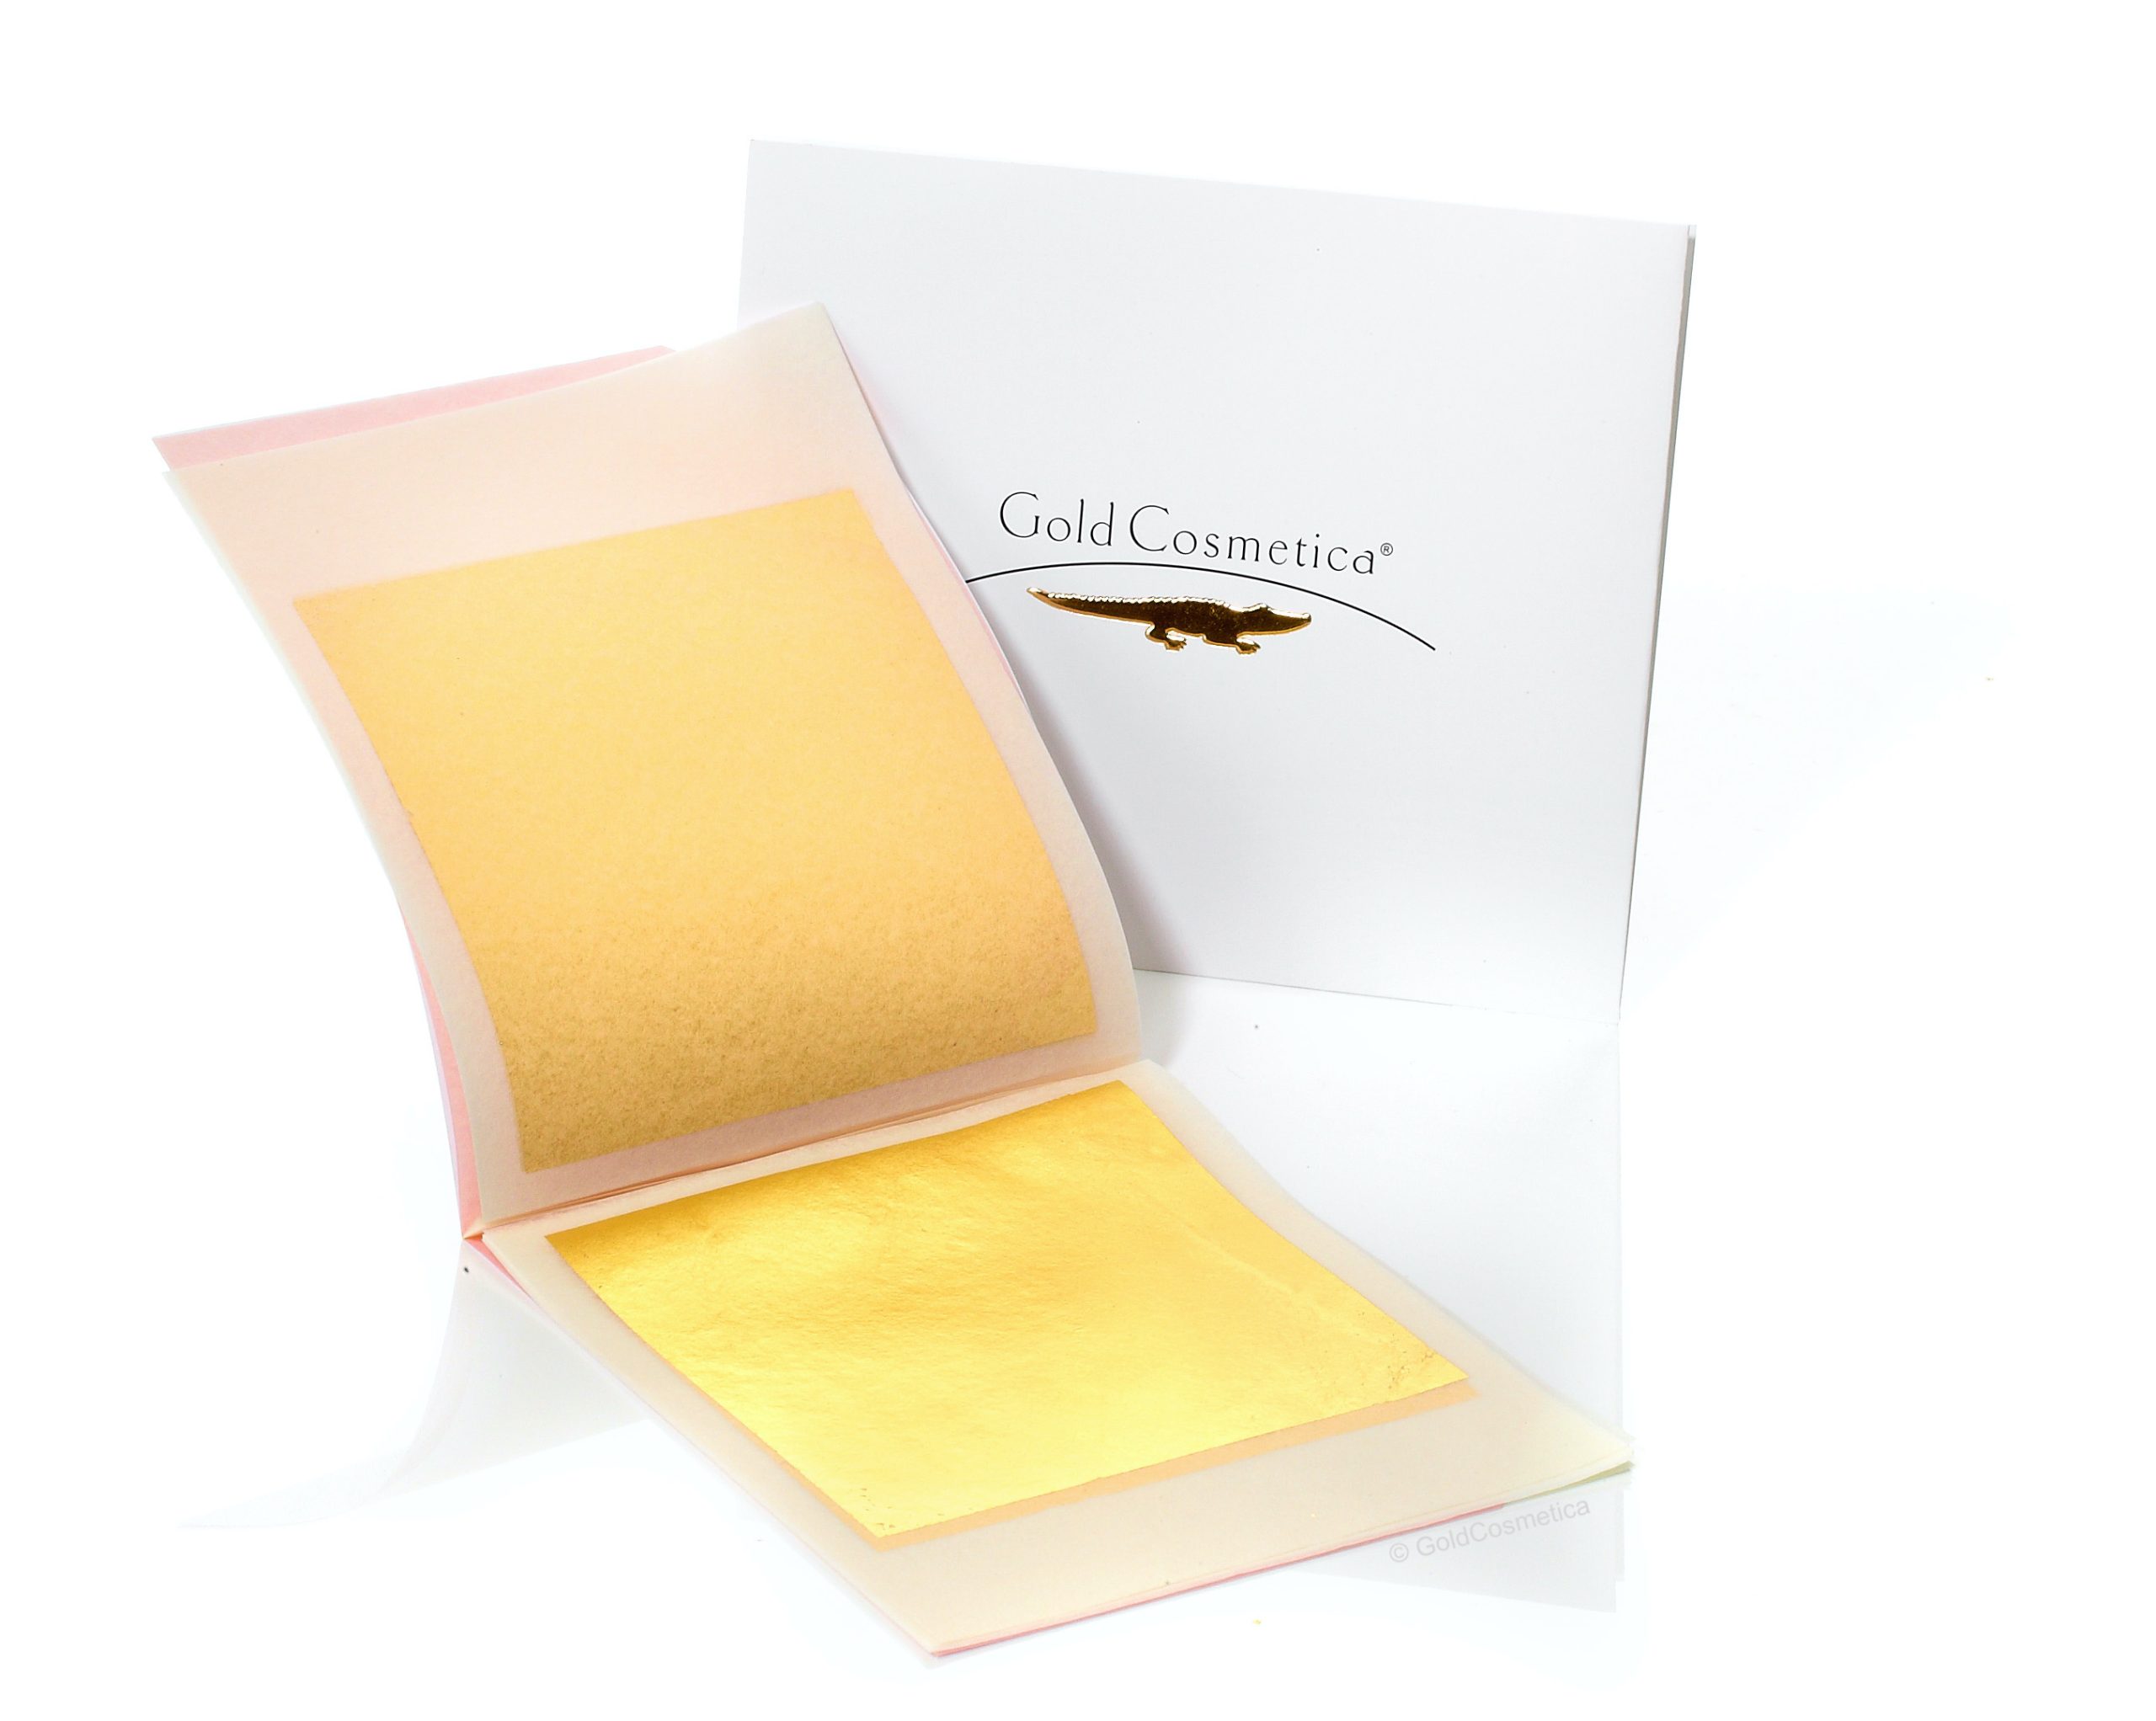 GoldCosmetica Körperbehandlung Gold 999 (24K) Verpackung und Inhalt